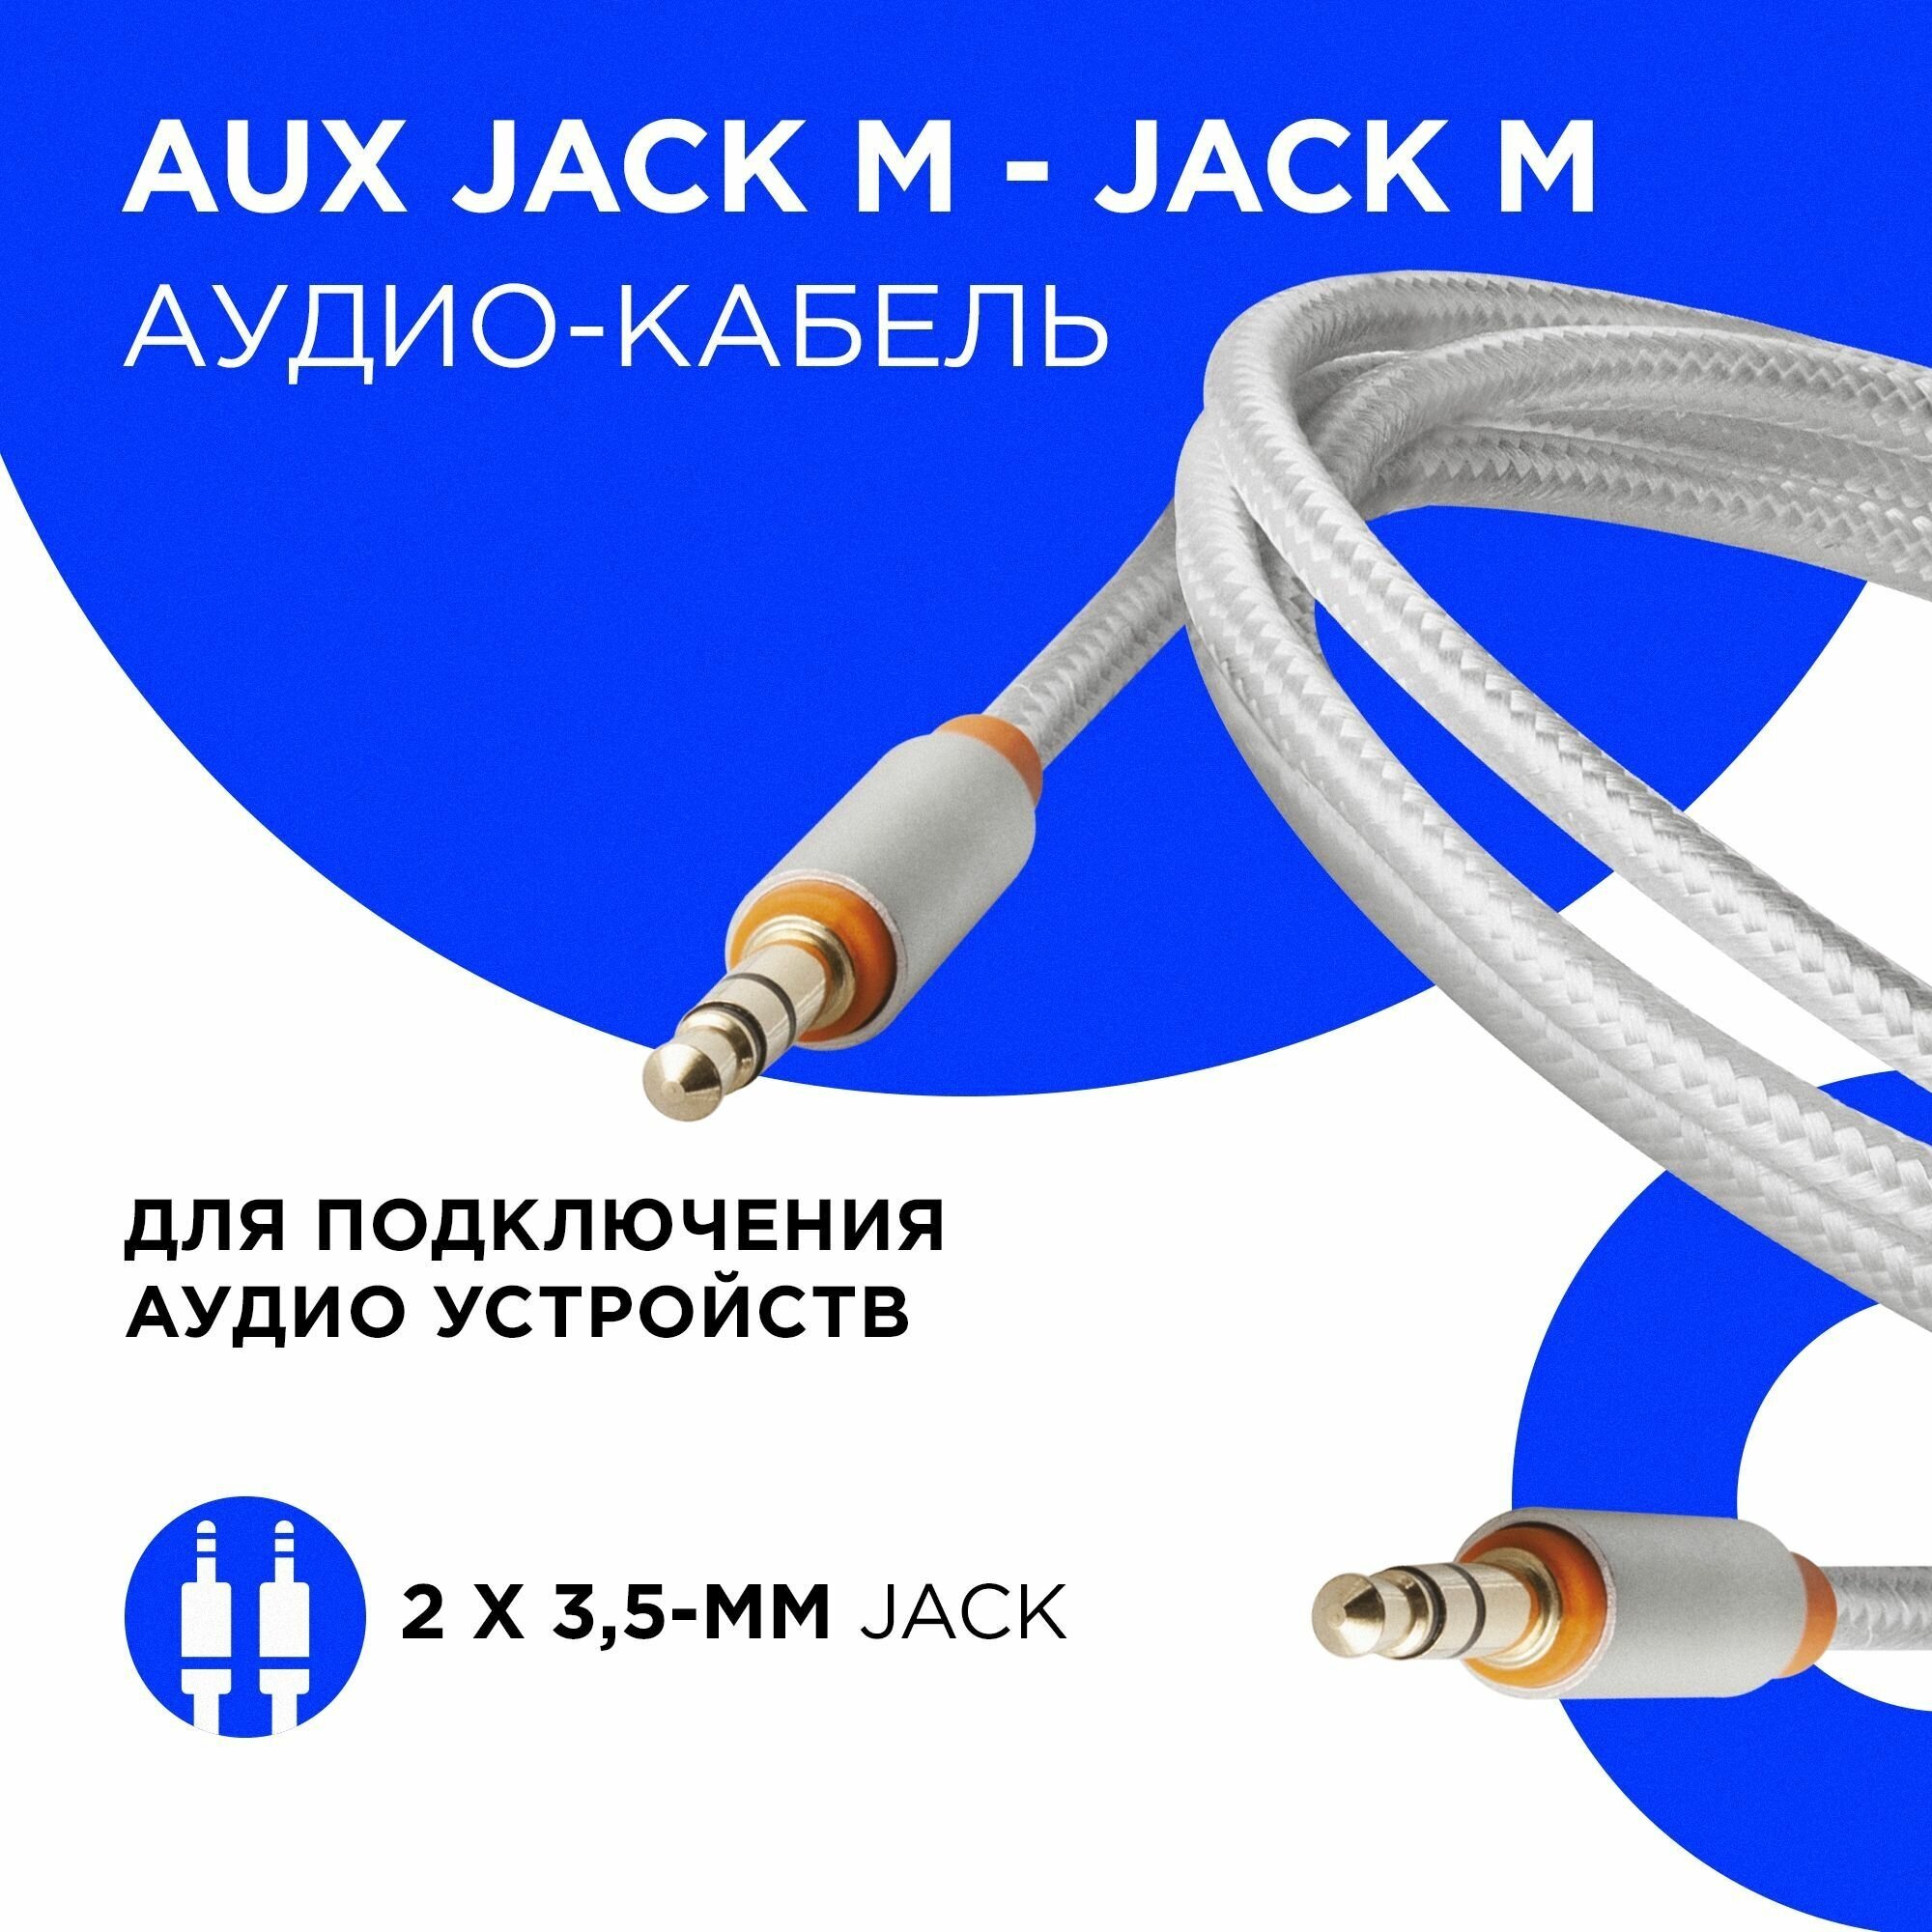 Аудио-кабель Defender JACK01-03 Белый JACK M- JACK M, 1,2м